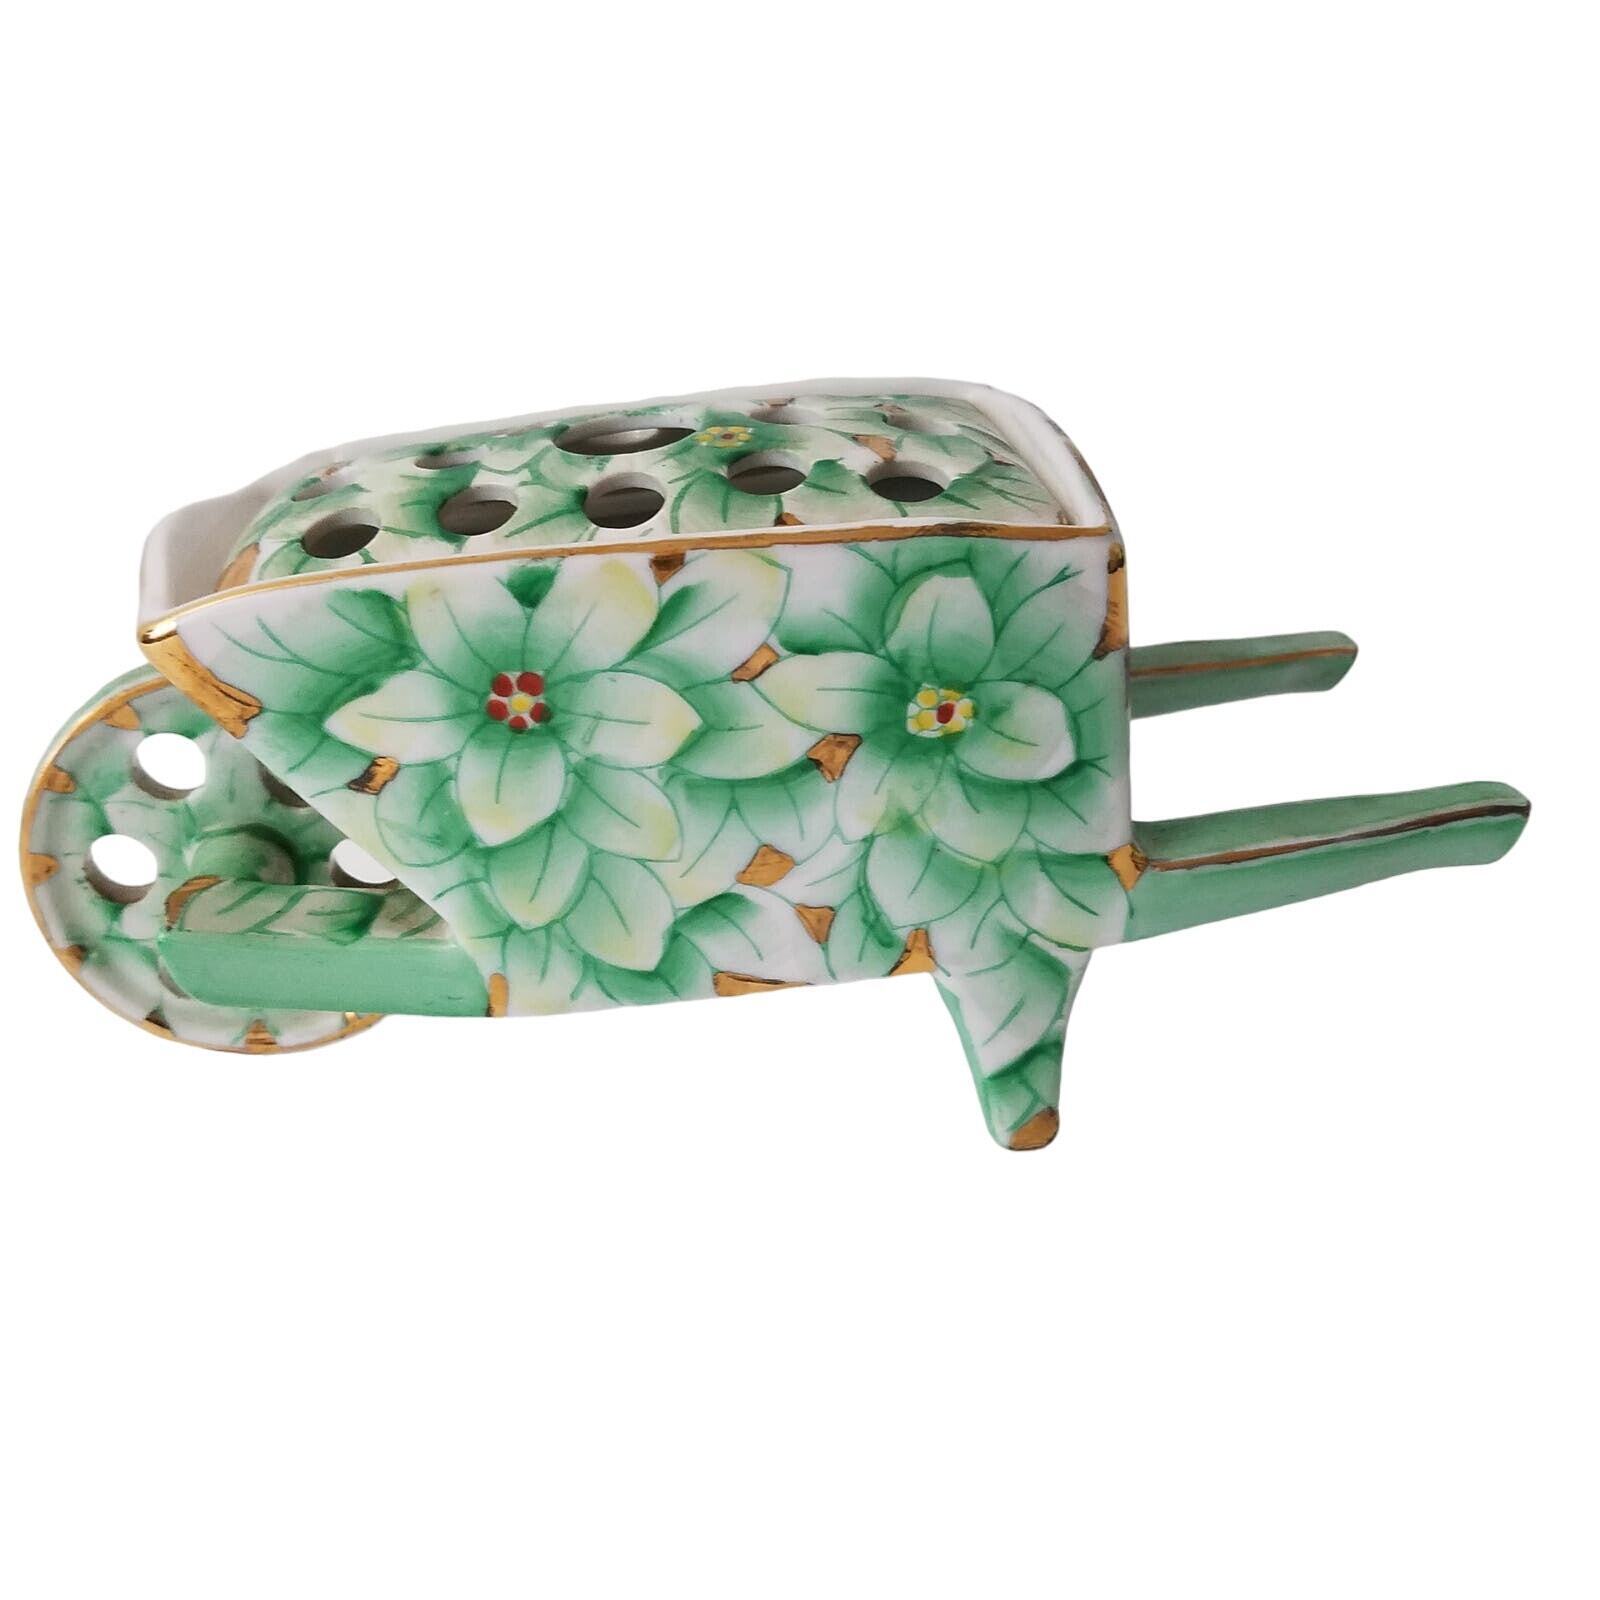 Lenwile China Ardalt Japan Wheelbarrow Flower Vase Hand Painted Green 